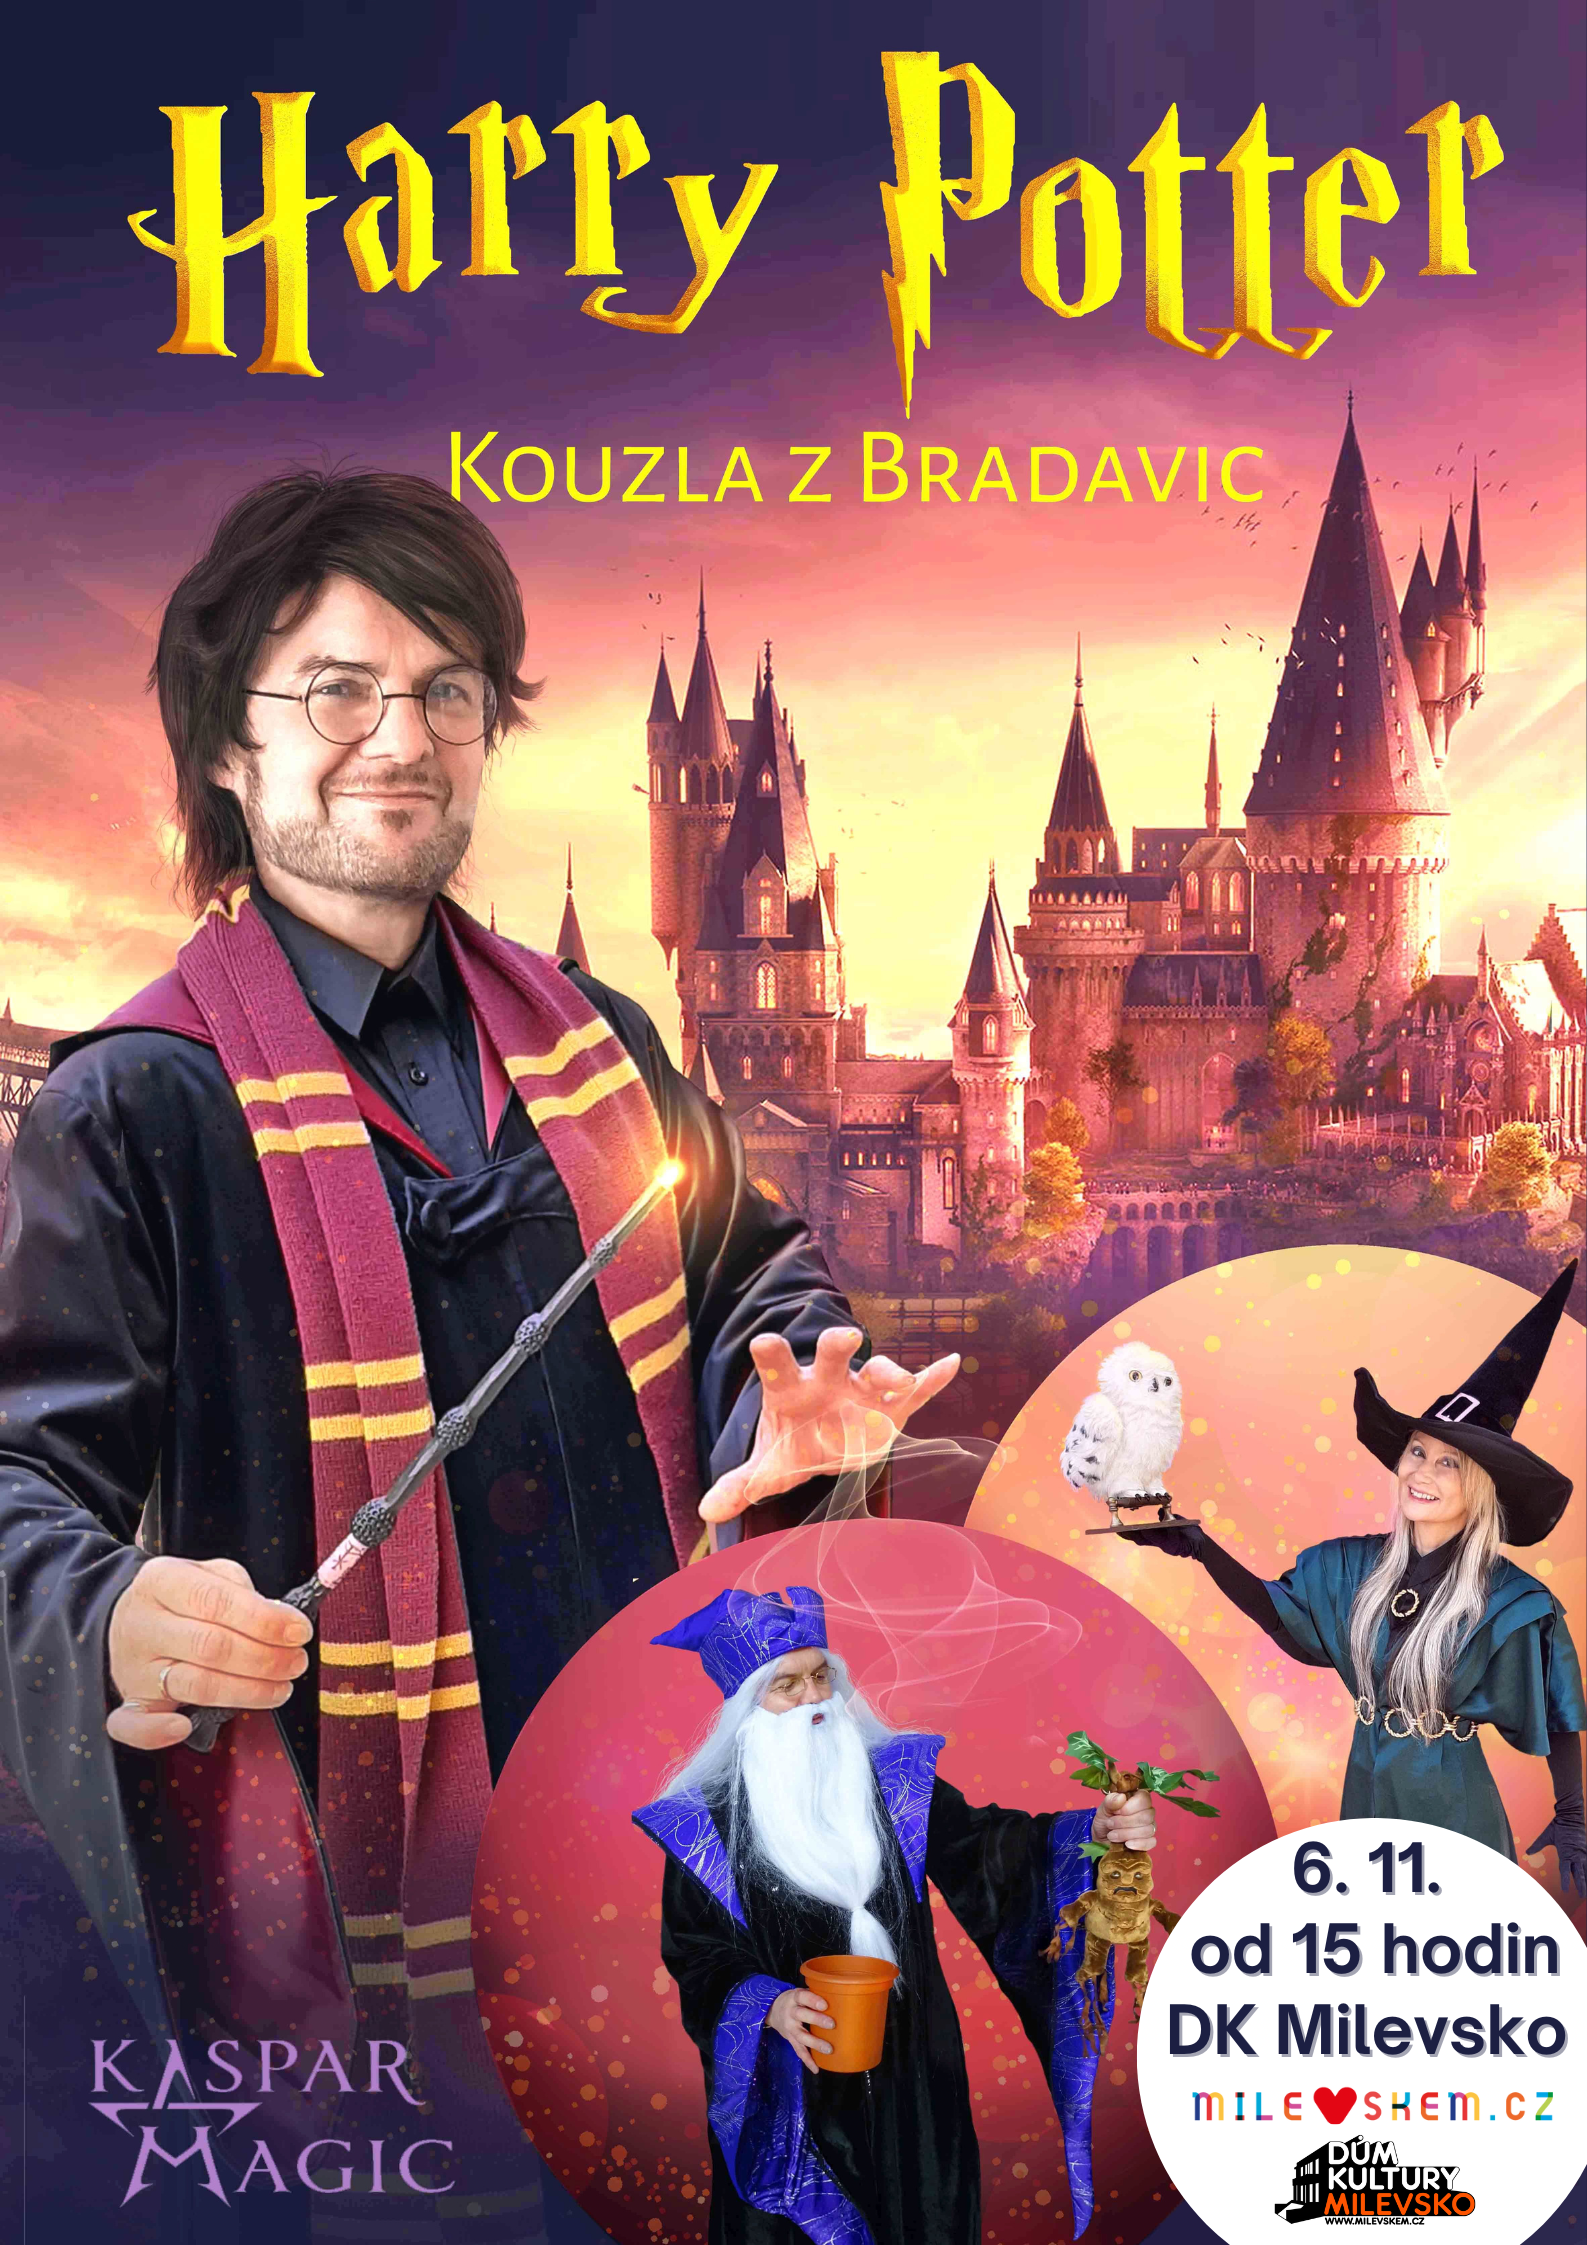 Plakát Harry Potter Show